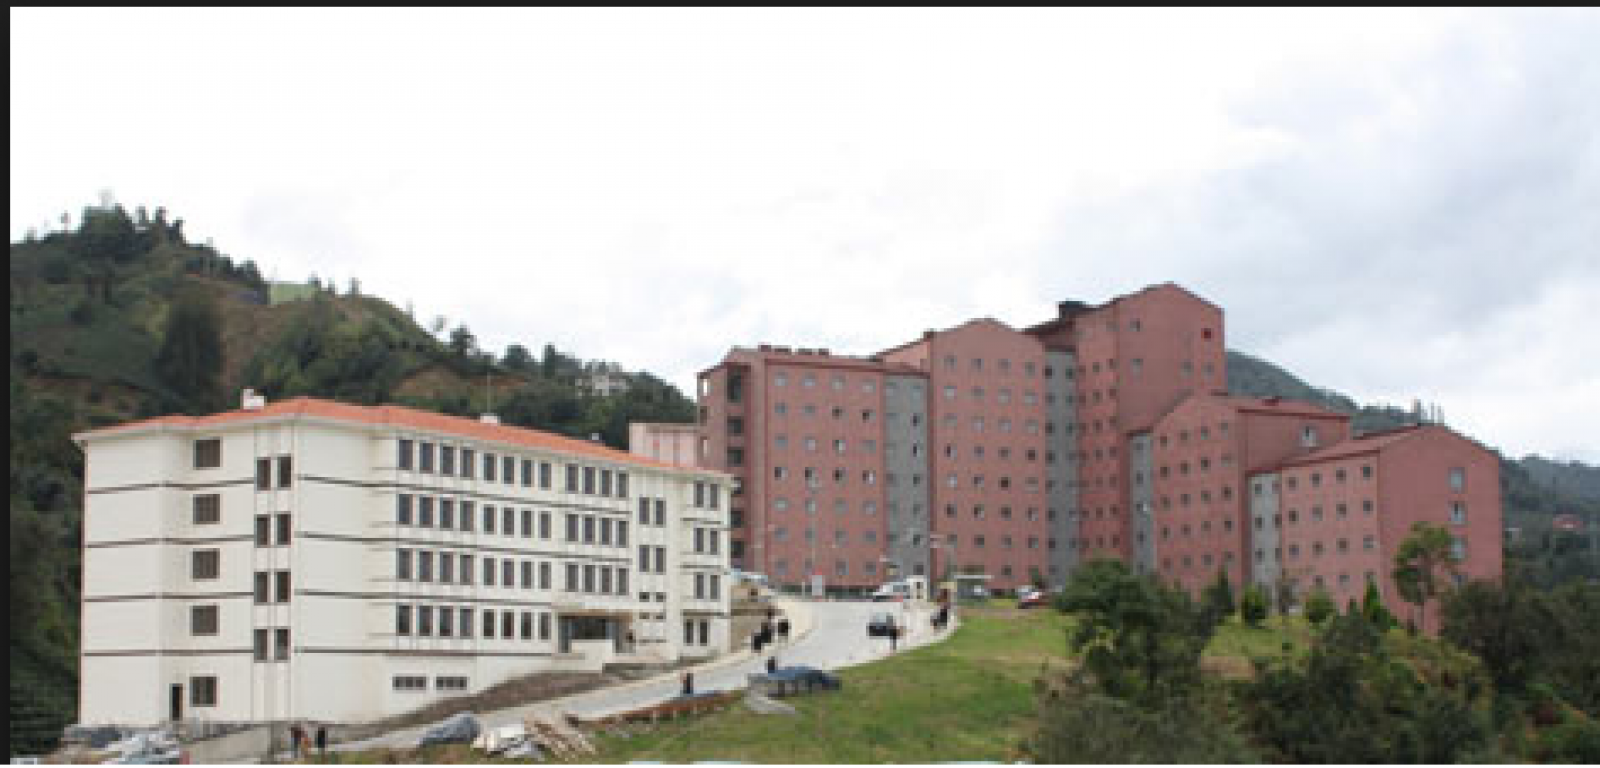 Rize University School of Health Professions